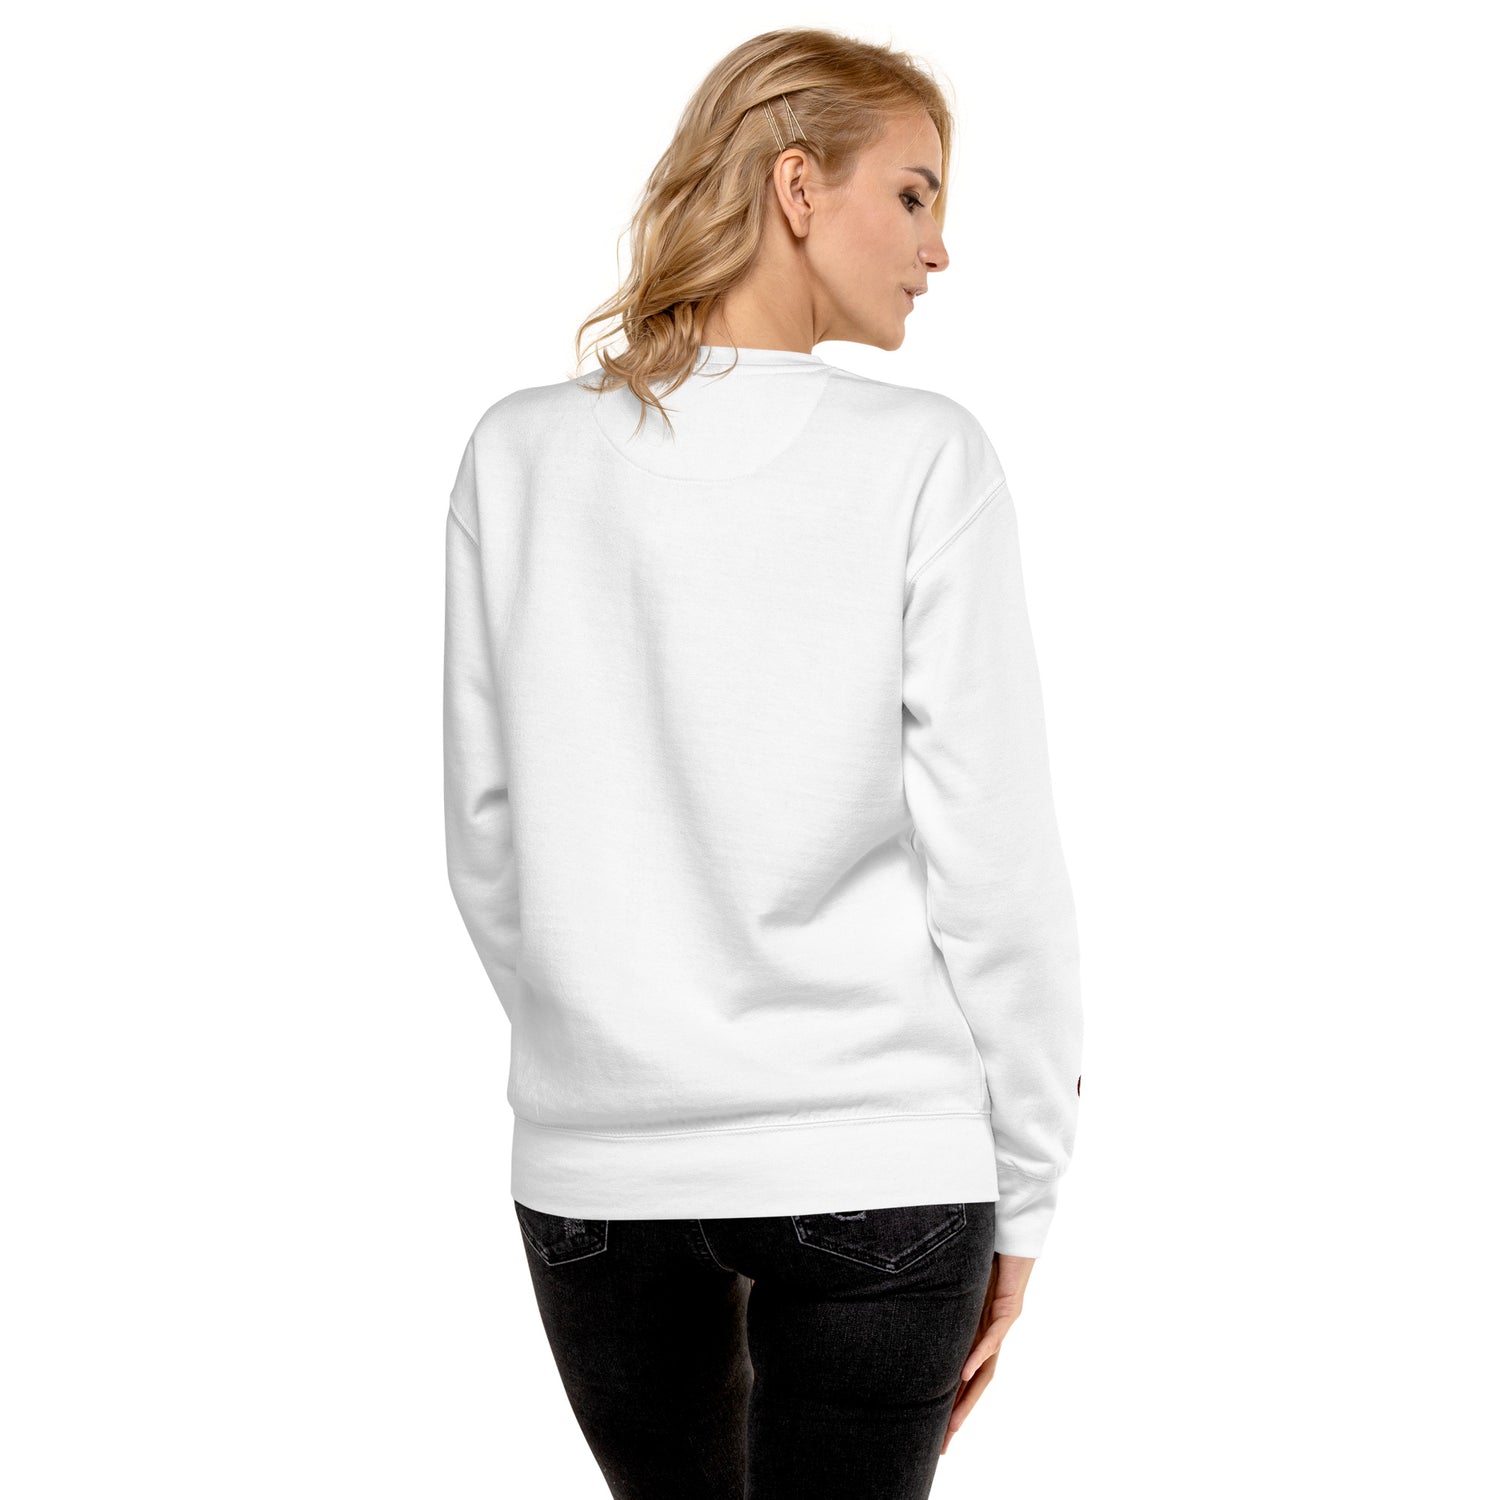 TIME OF VIBES Premium Sweatshirt NEW YORK (Weiß/Braun) - €59,00